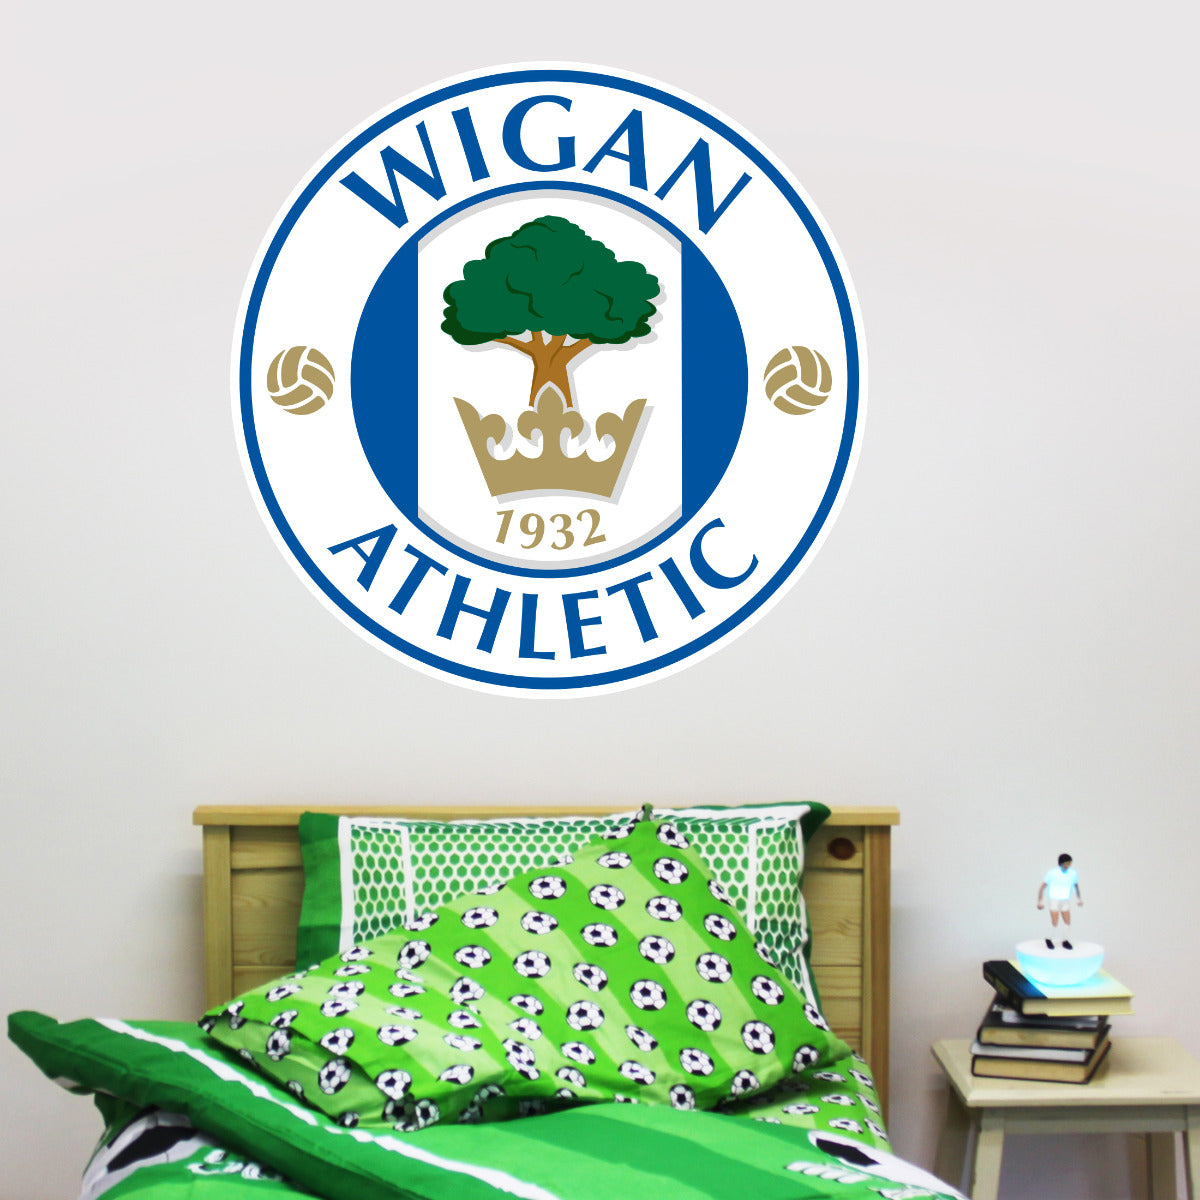 Wigan Athletic Crest Wall Sticker